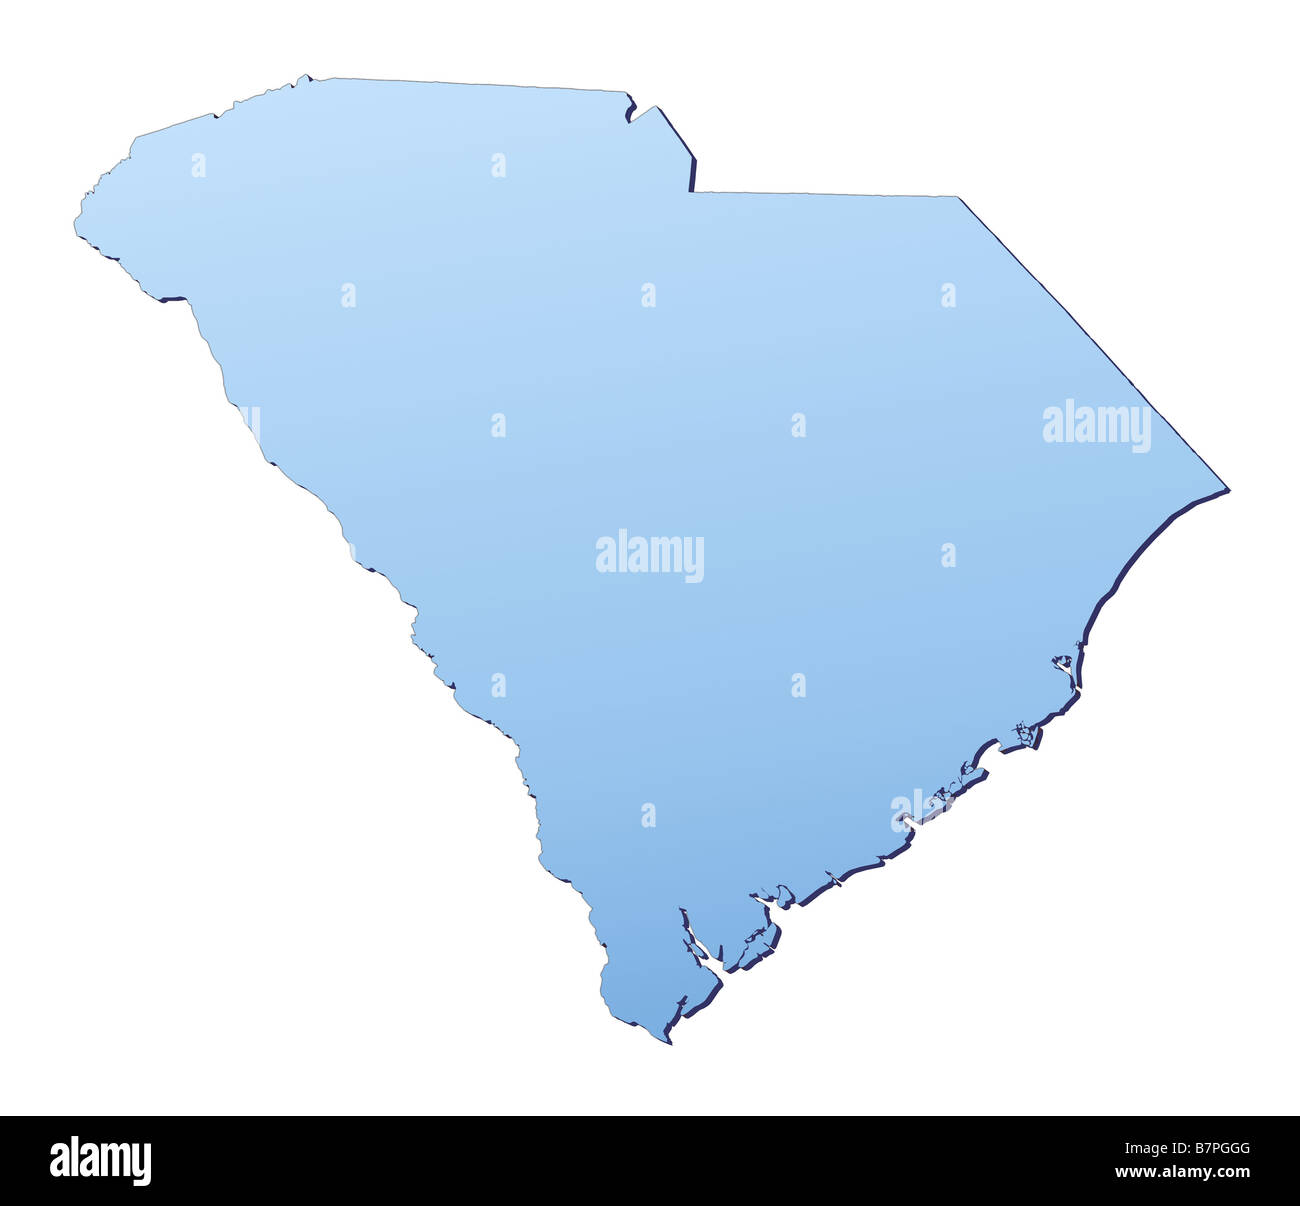 South Carolina Karte Fotos Und Bildmaterial In Hoher Auflösung Alamy